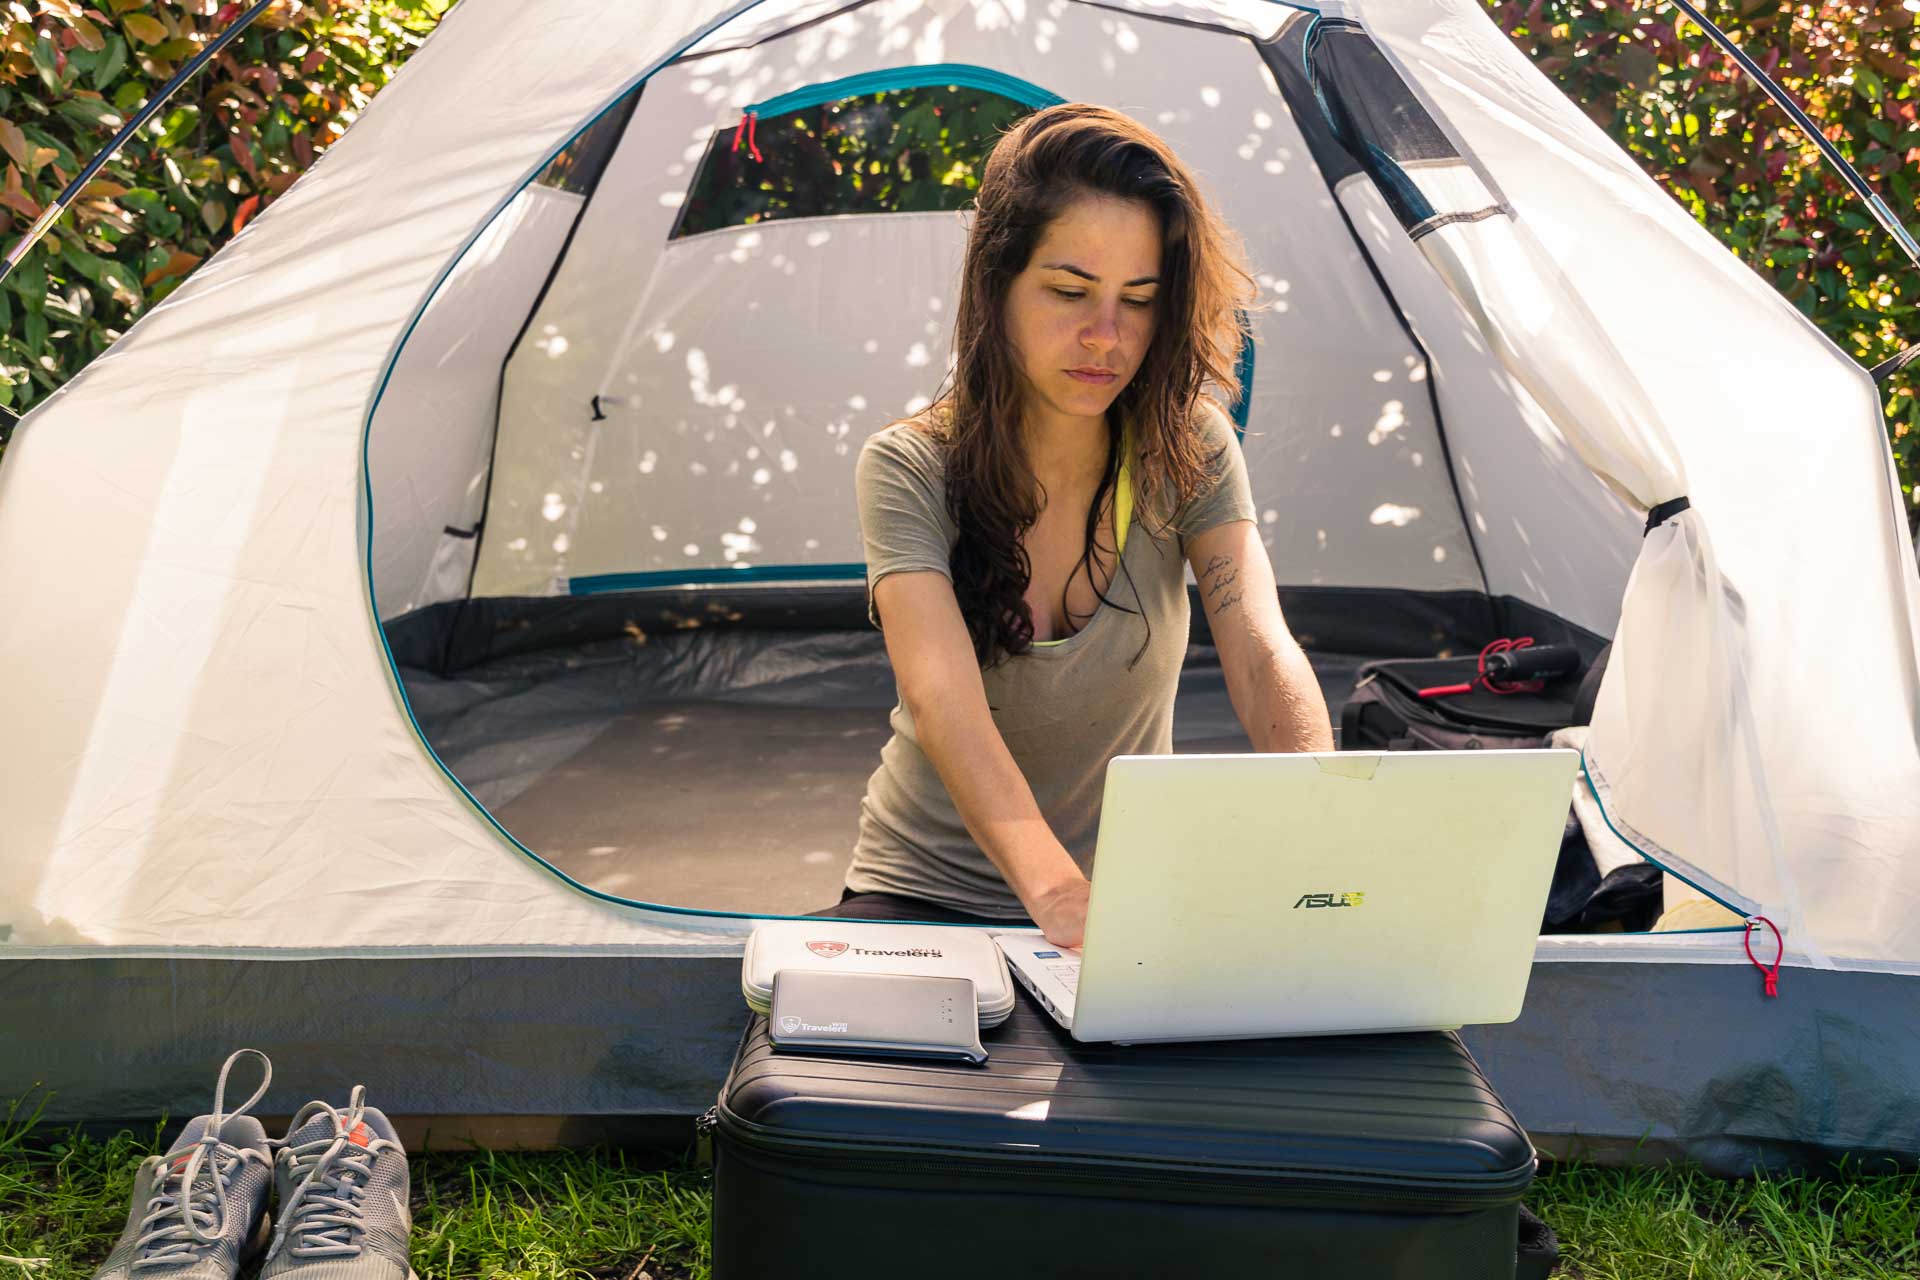 Fernanda using her laptop in her tent